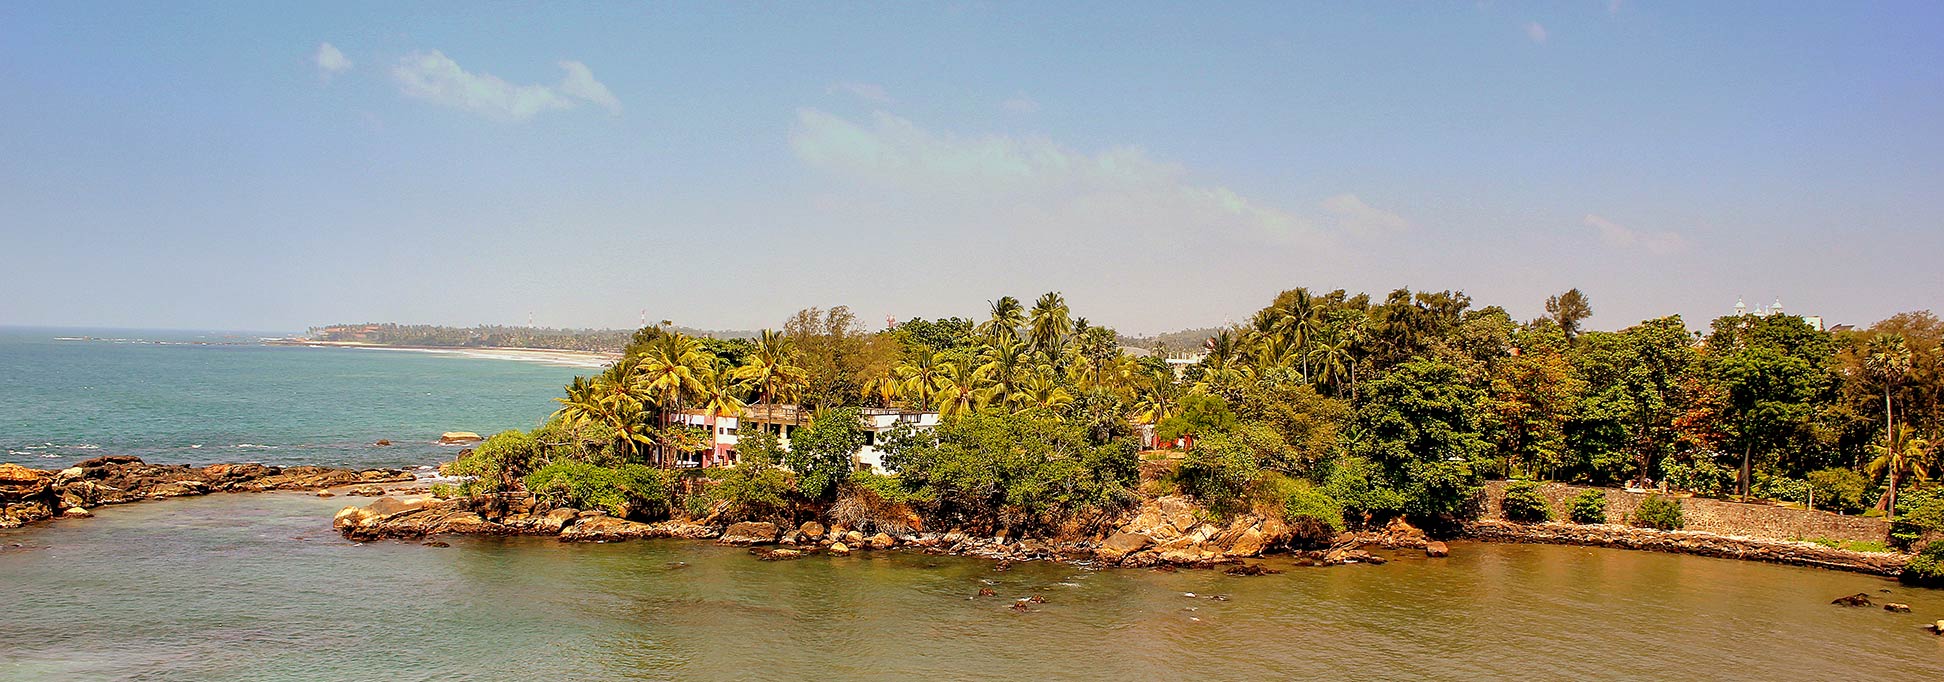 Indian Ocean coastline from Galle Fort in Sri Lanka